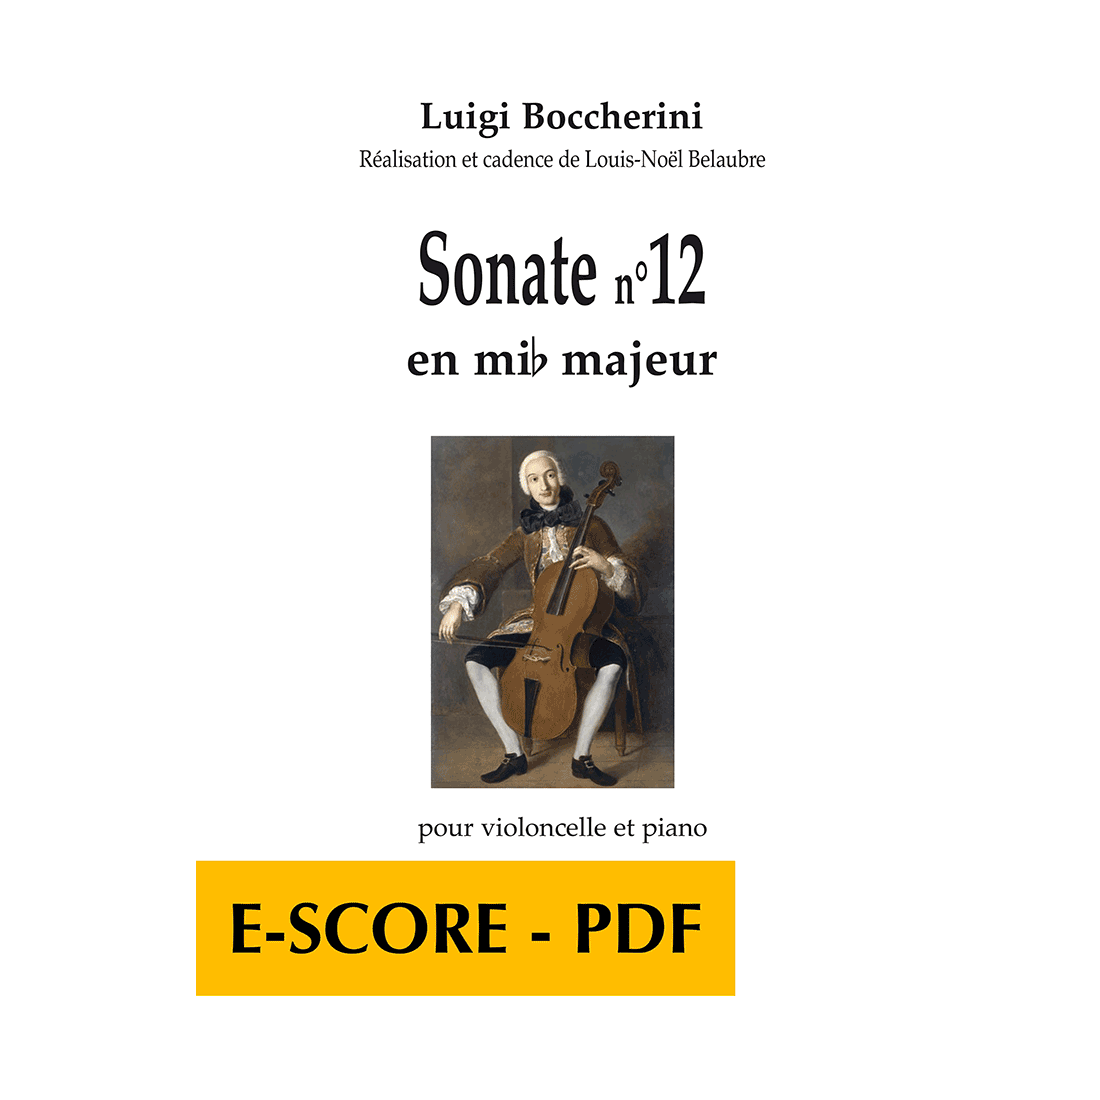 Sonate n°12 en mib majeur für Violoncello und Klavier - E-score PDF